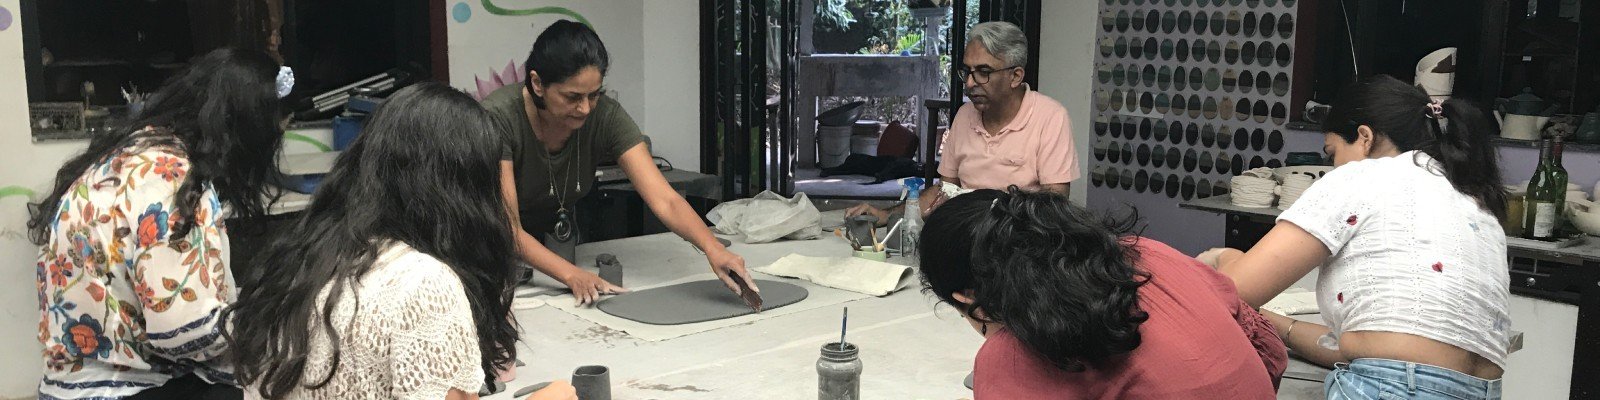 workshop scenes at aura pottery studio